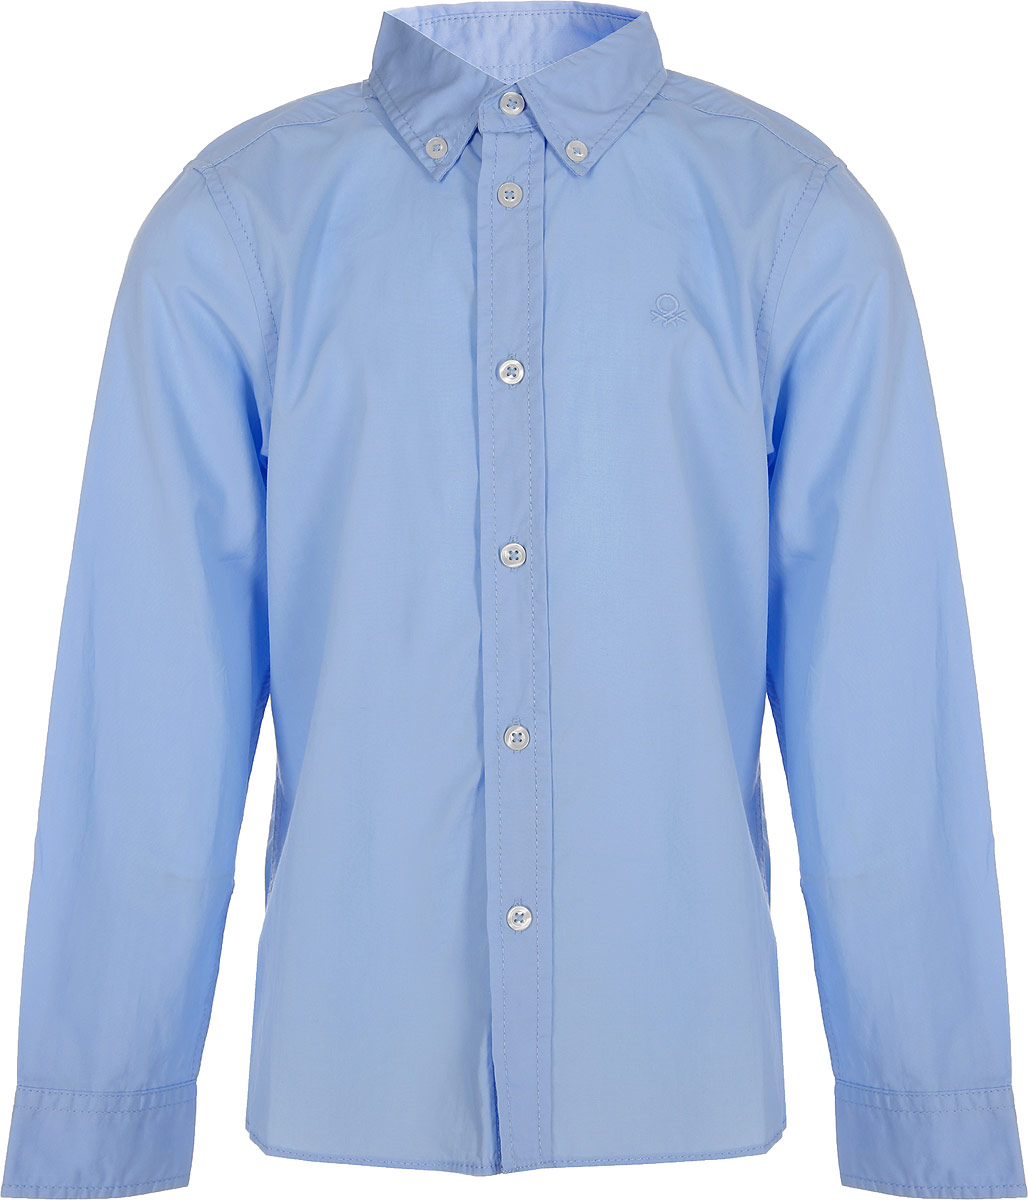 Рубашка для мальчика United Colors of Benetton, цвет: темно-голубой. 5EW75Q600_20B. Размер 100